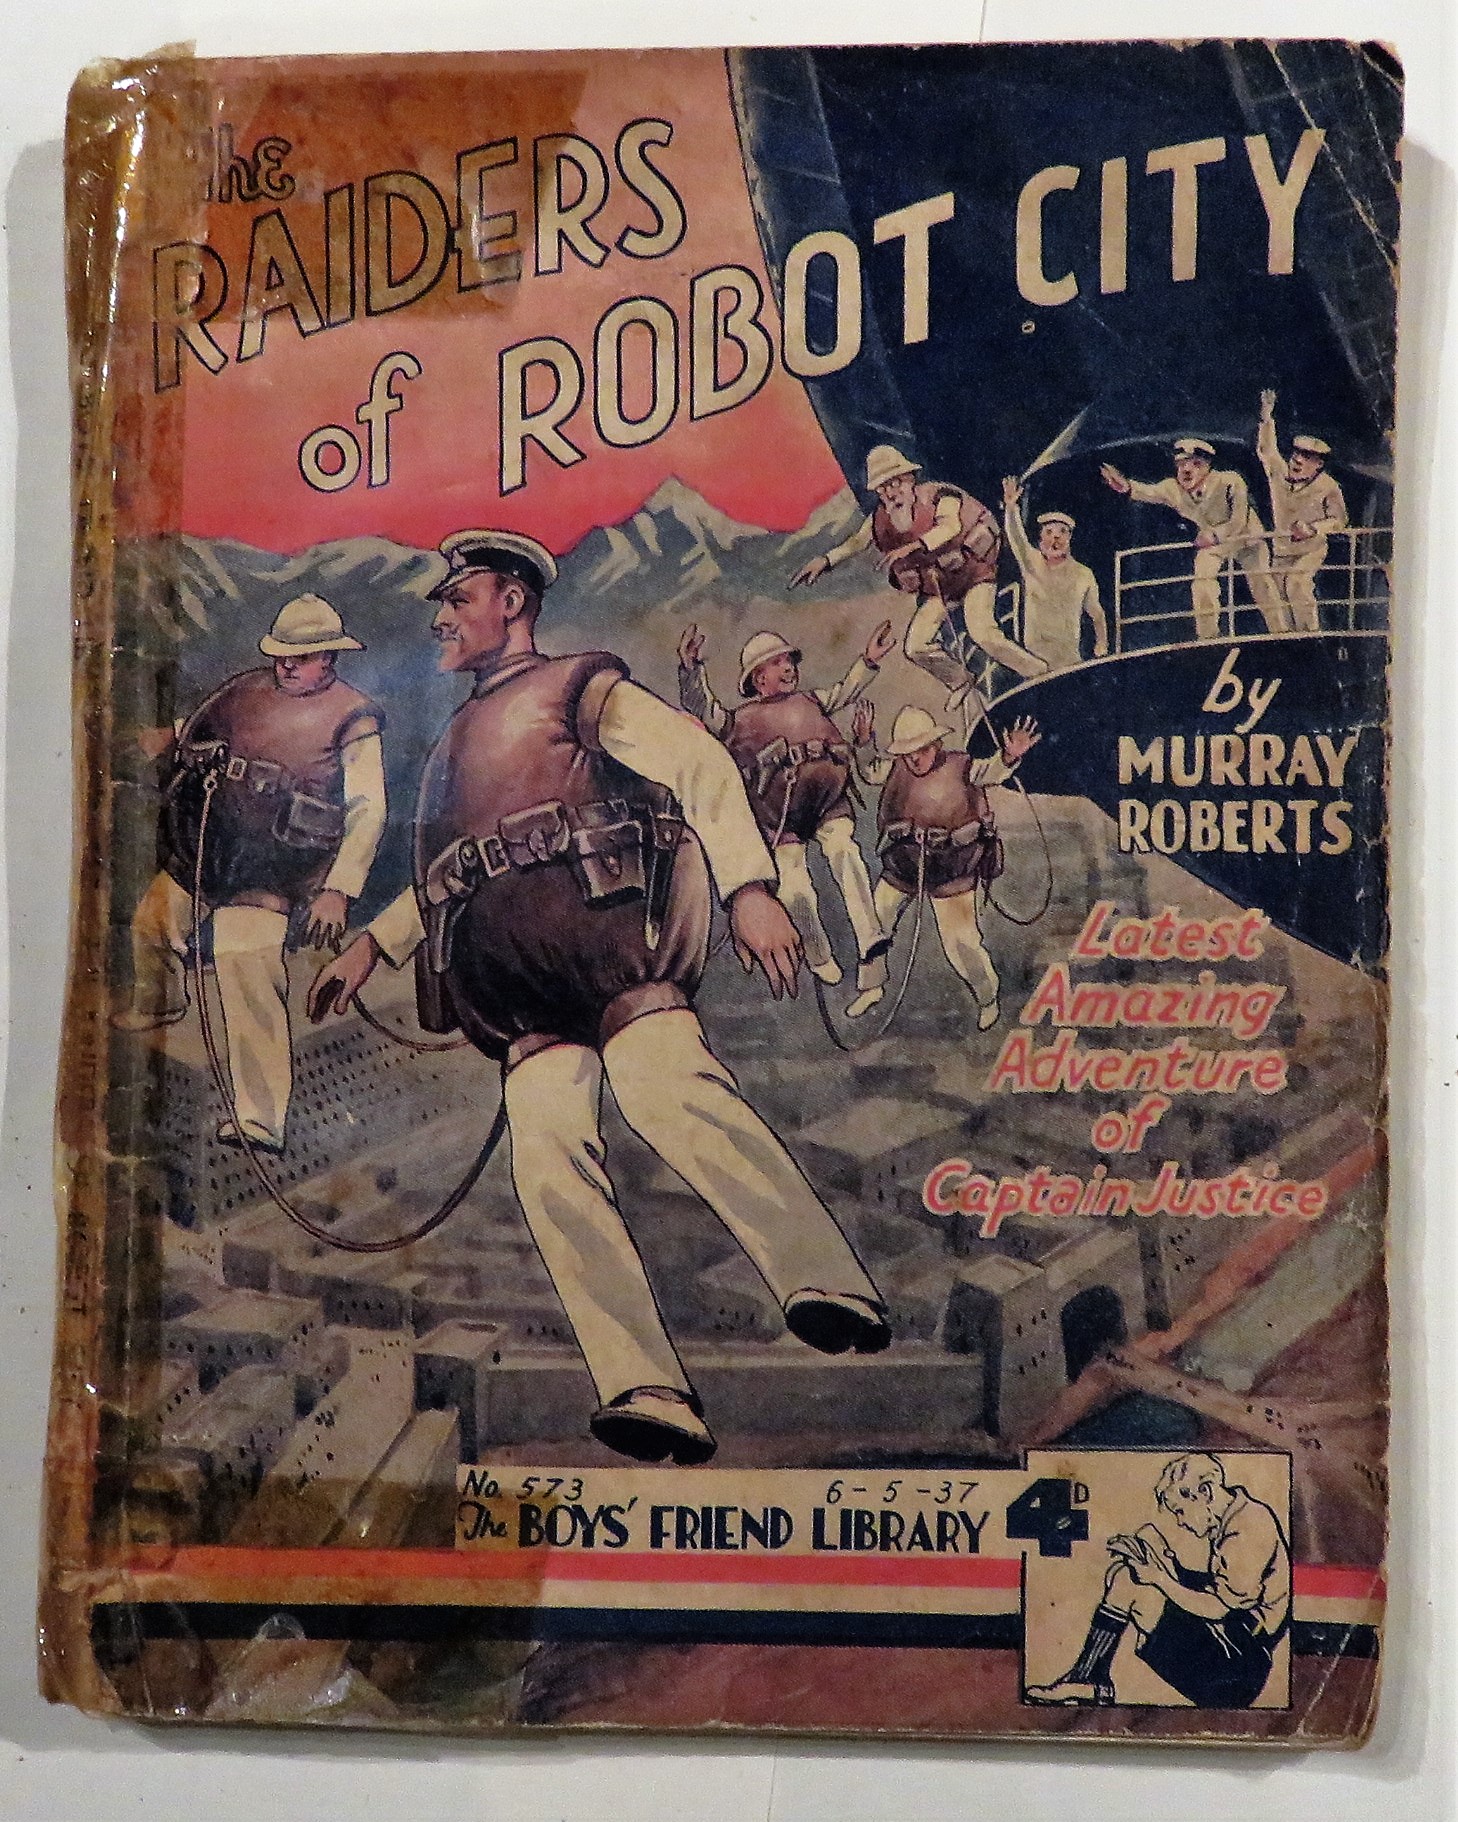 The Raiders of Robot City